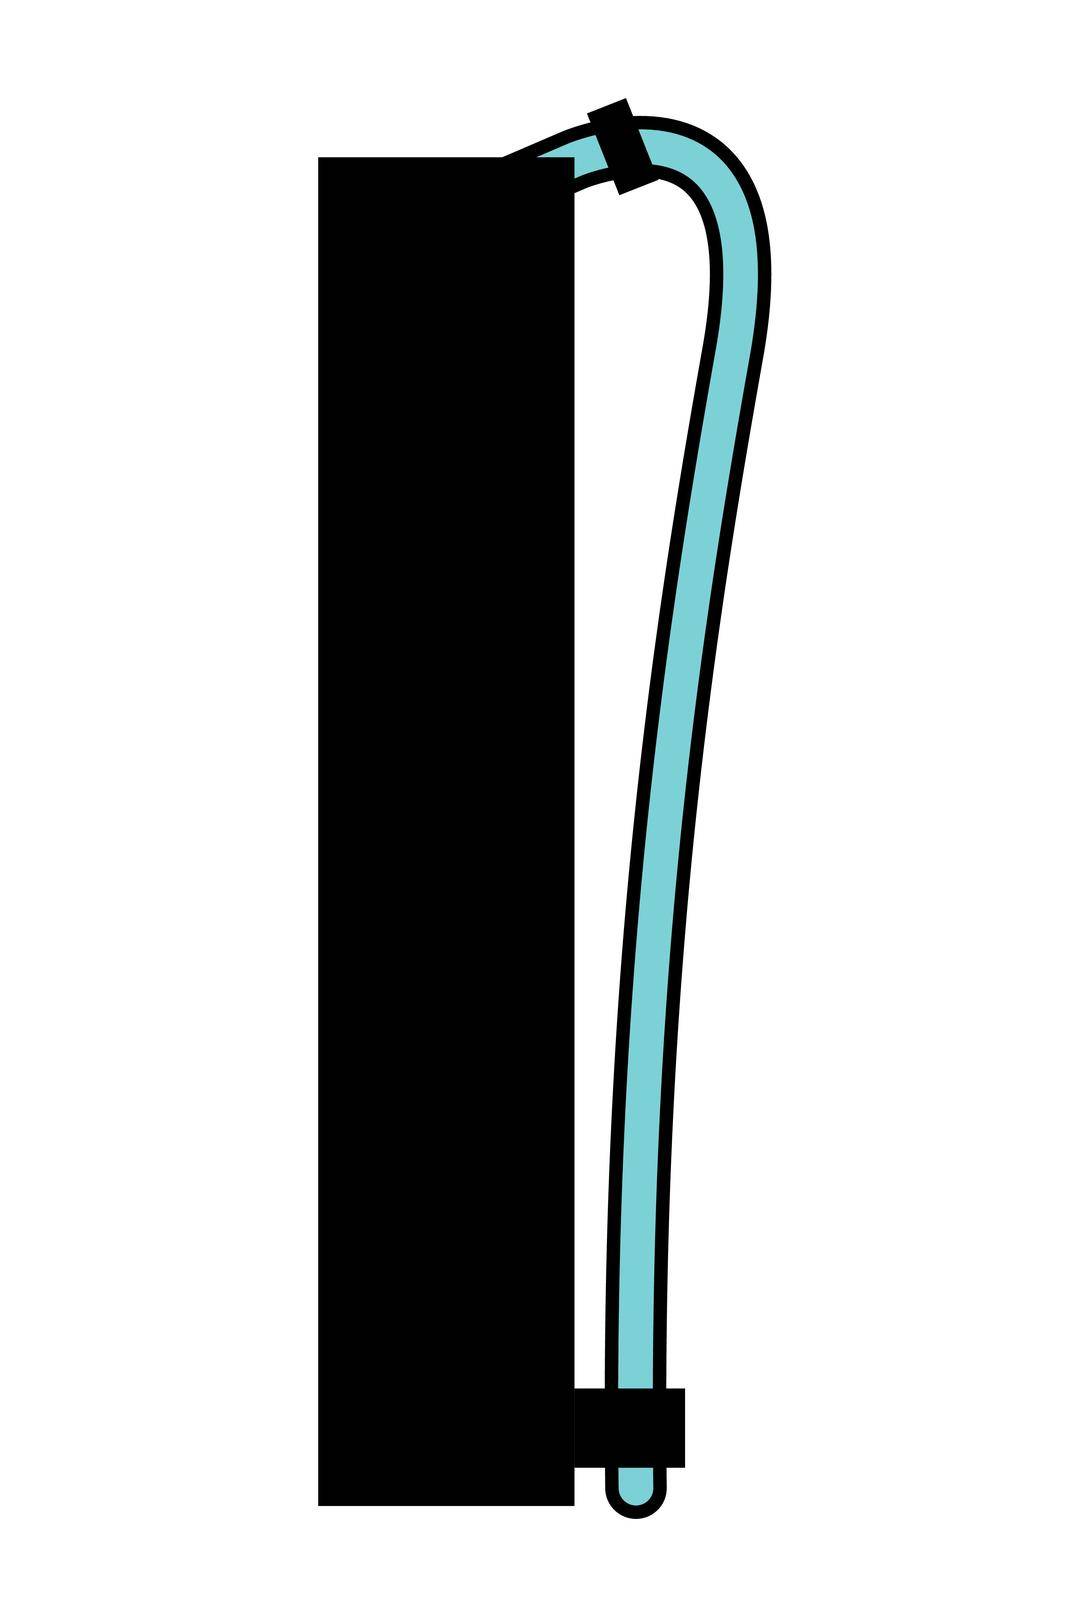 Stick and clubs holder for rhythmic gymnastics pictogram vector illustration. by vas_evg